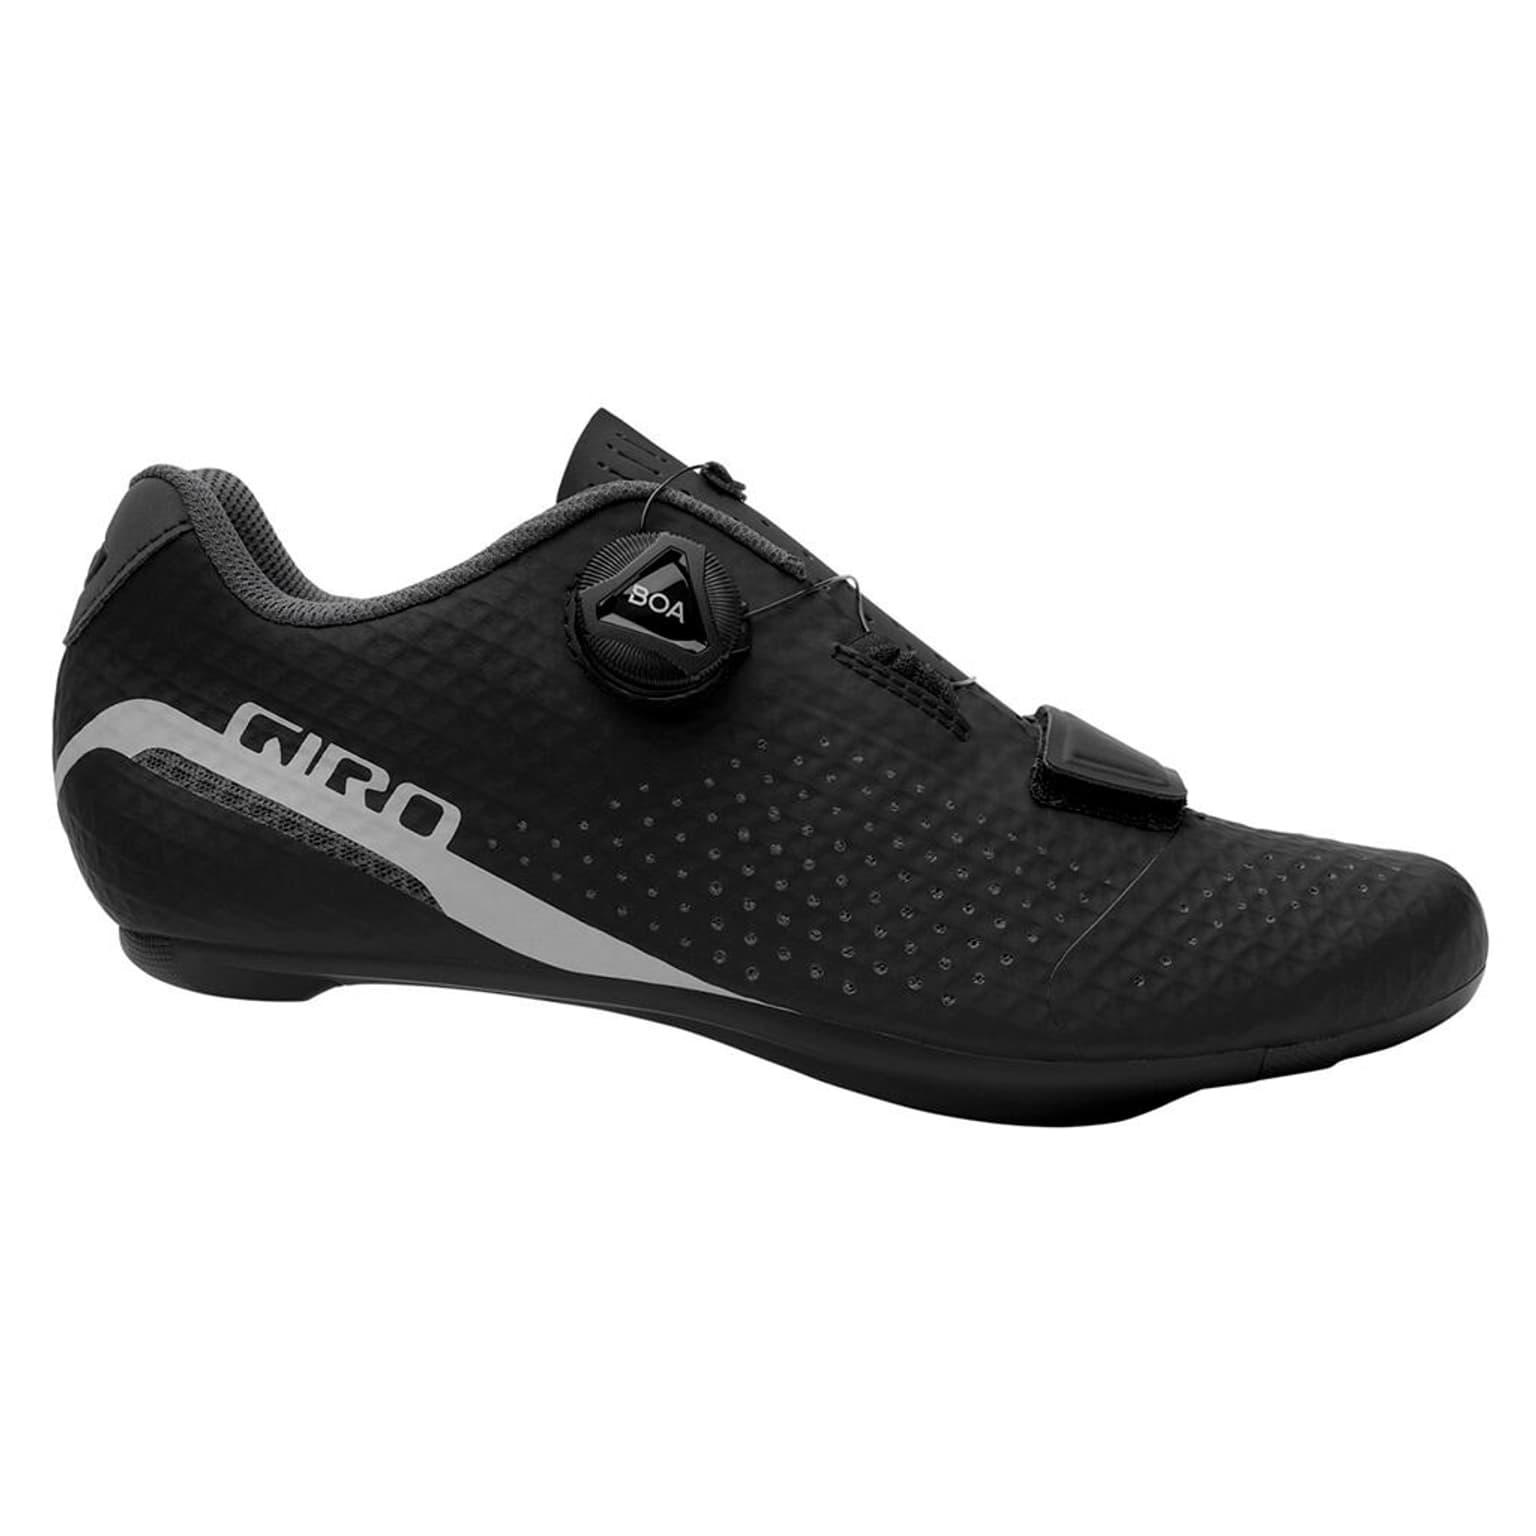 Giro Giro Cadet W Shoe Chaussures de cyclisme noir 1